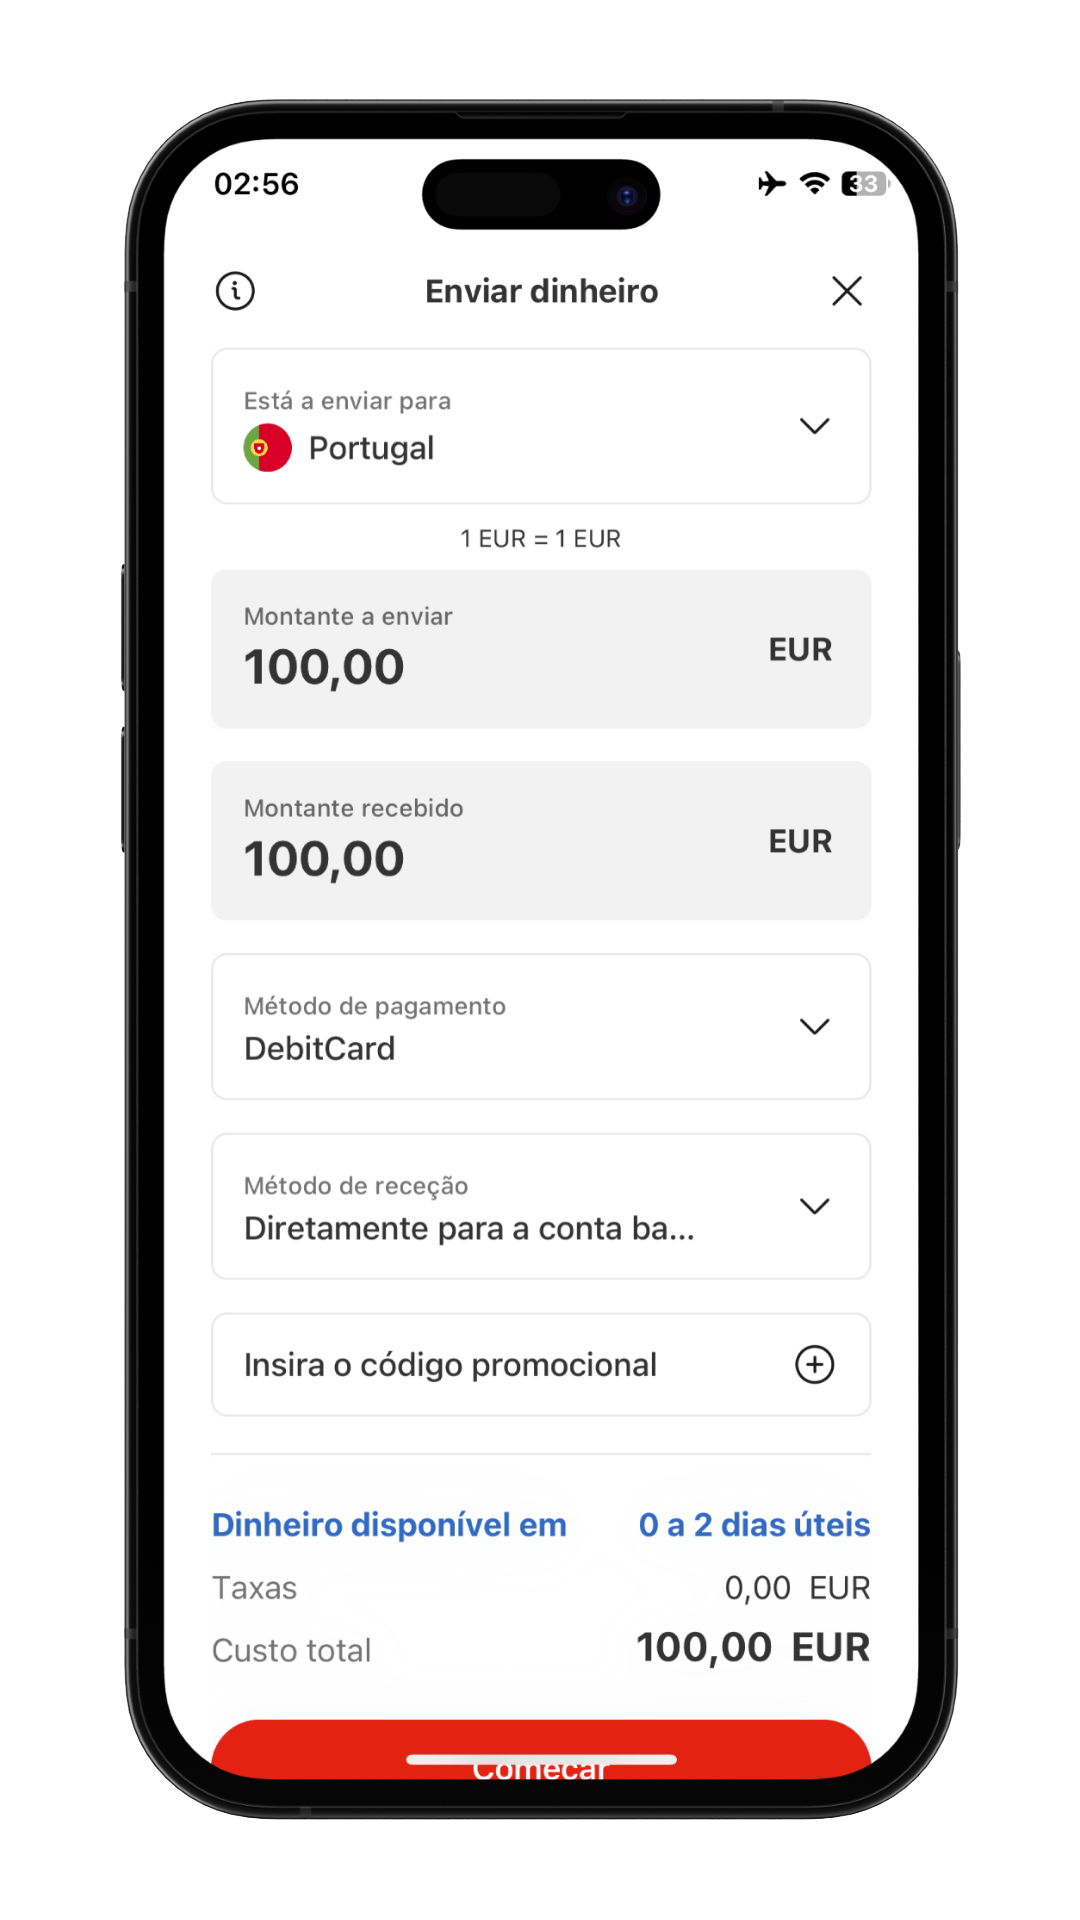 MoneyGram Money Transfer App screen to enter amount and send